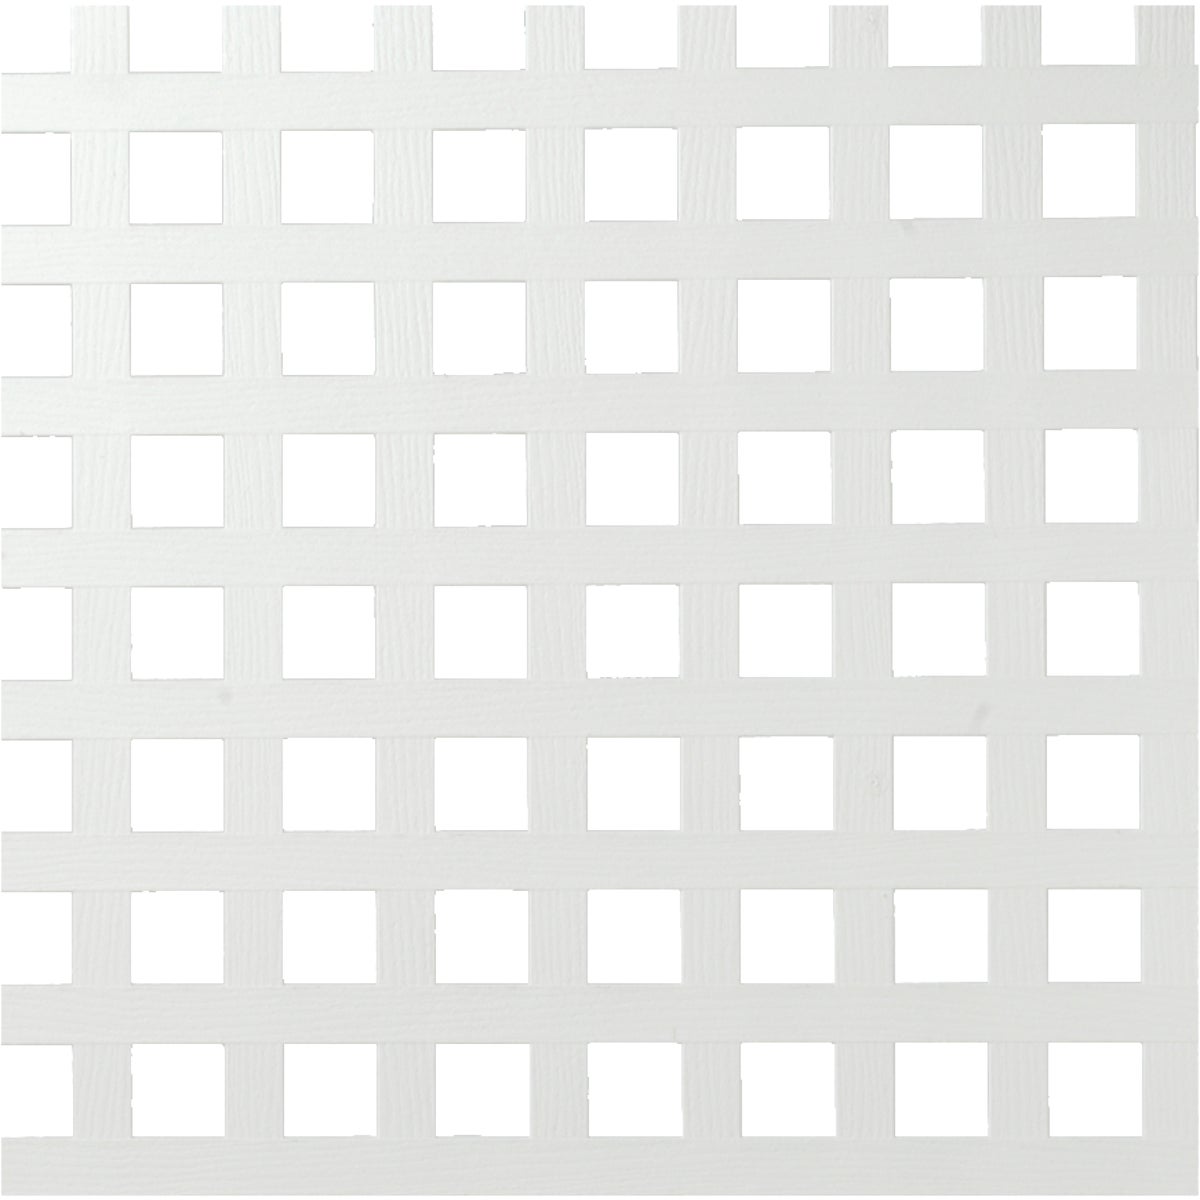 Deckorators 4 Ft. W x 8 Ft. L x 3/16 In. Thick White Vinyl Privacy Square Lattice Panel